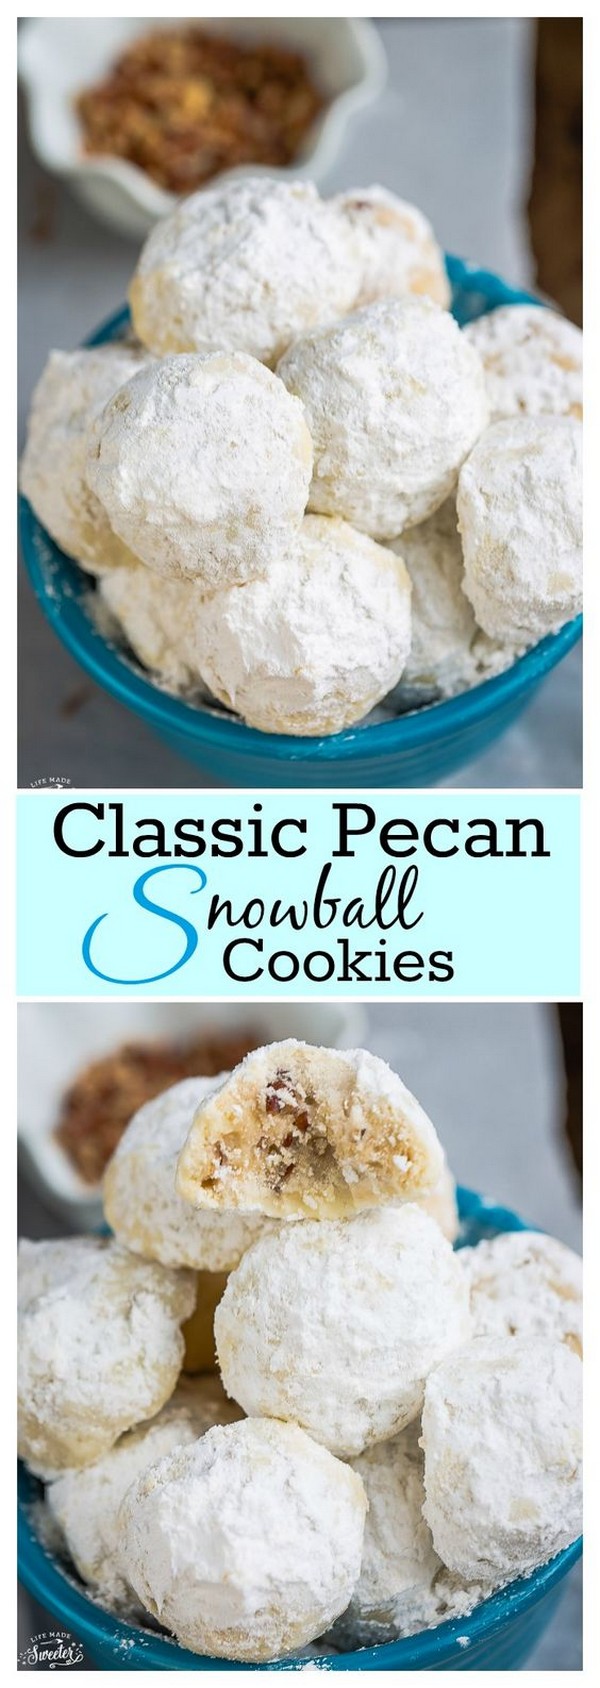 Classic Pecan Snowball Cookies